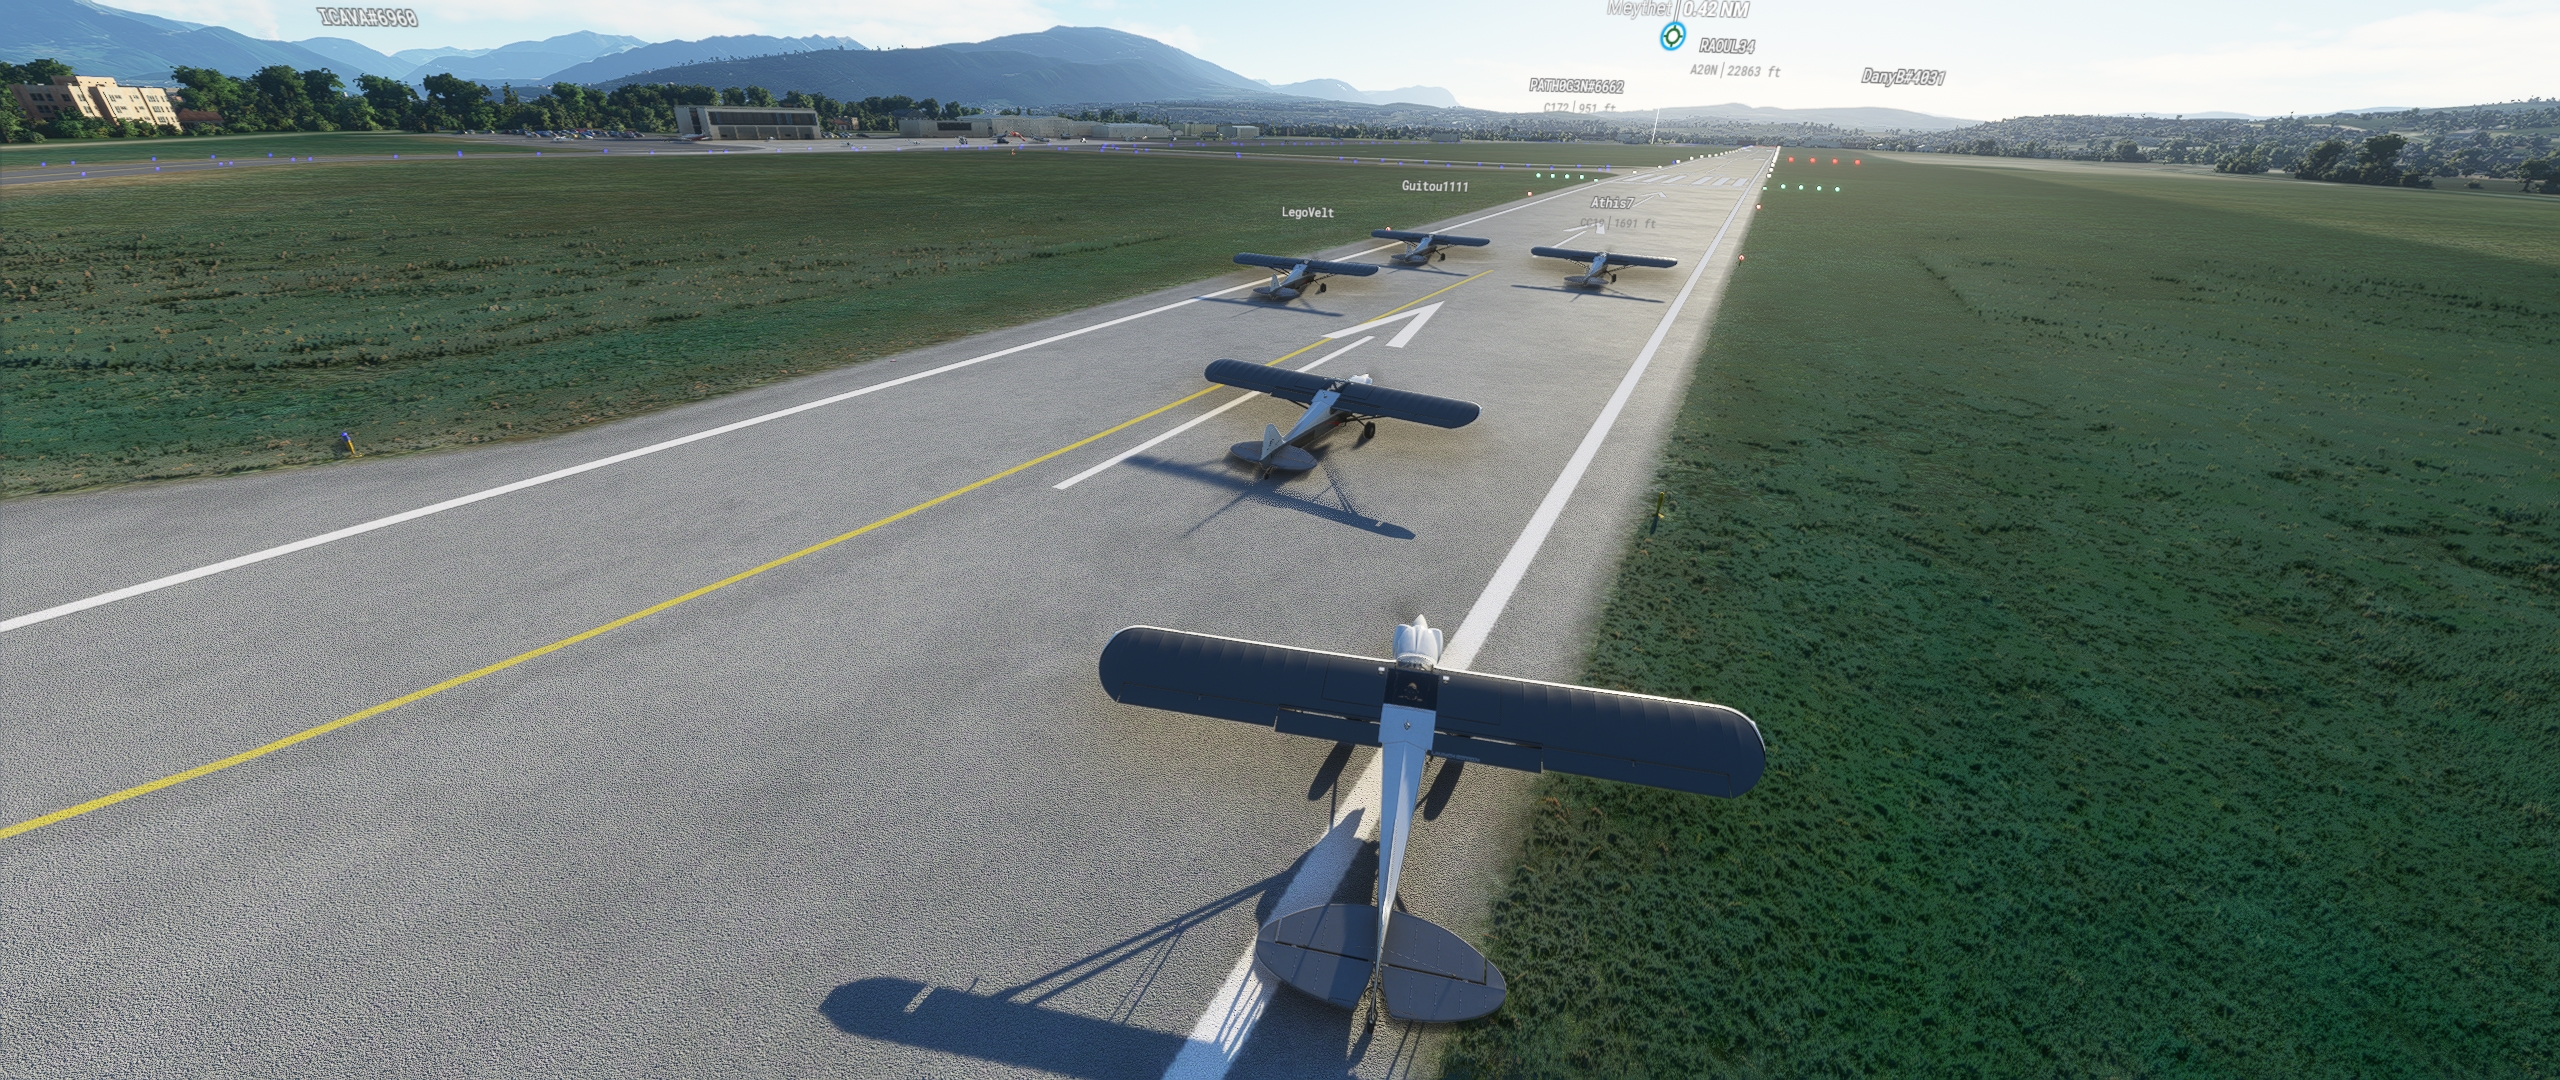 2020-11-28 17_04_26-Microsoft Flight Simulator - 1.11.6.0.jpg